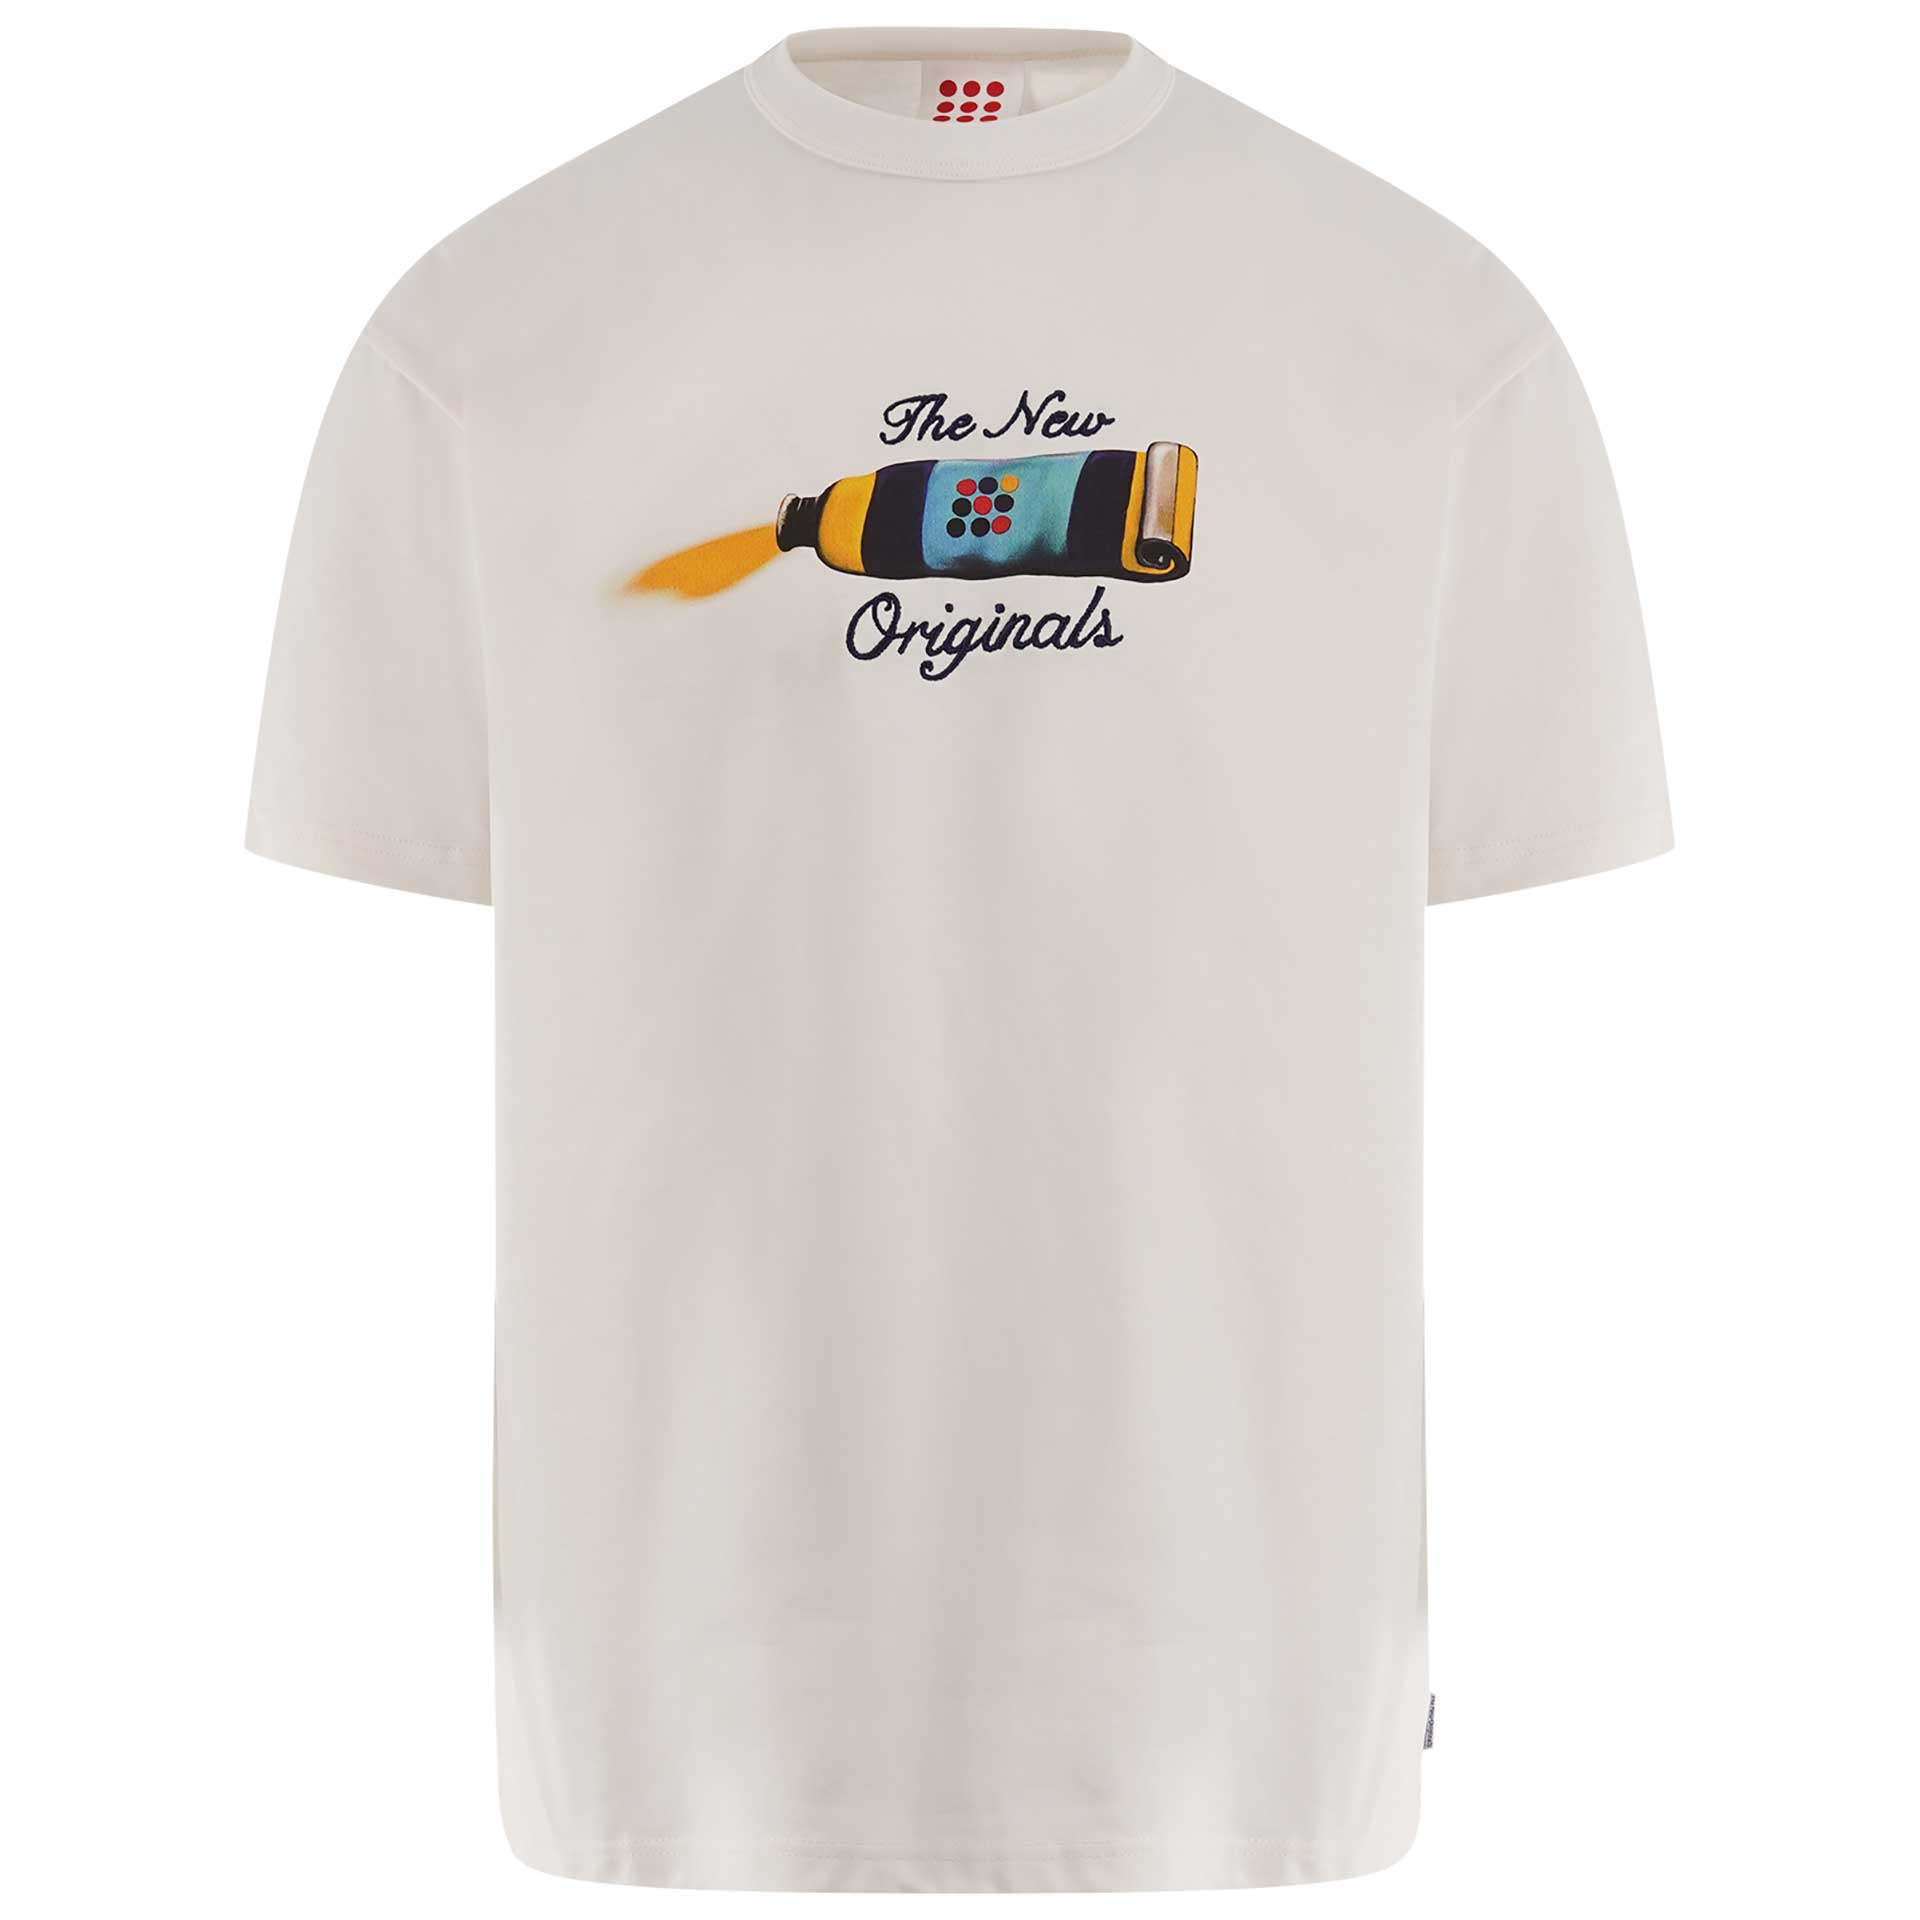 The New Originals Clothing T-shirt Tube Tee 1